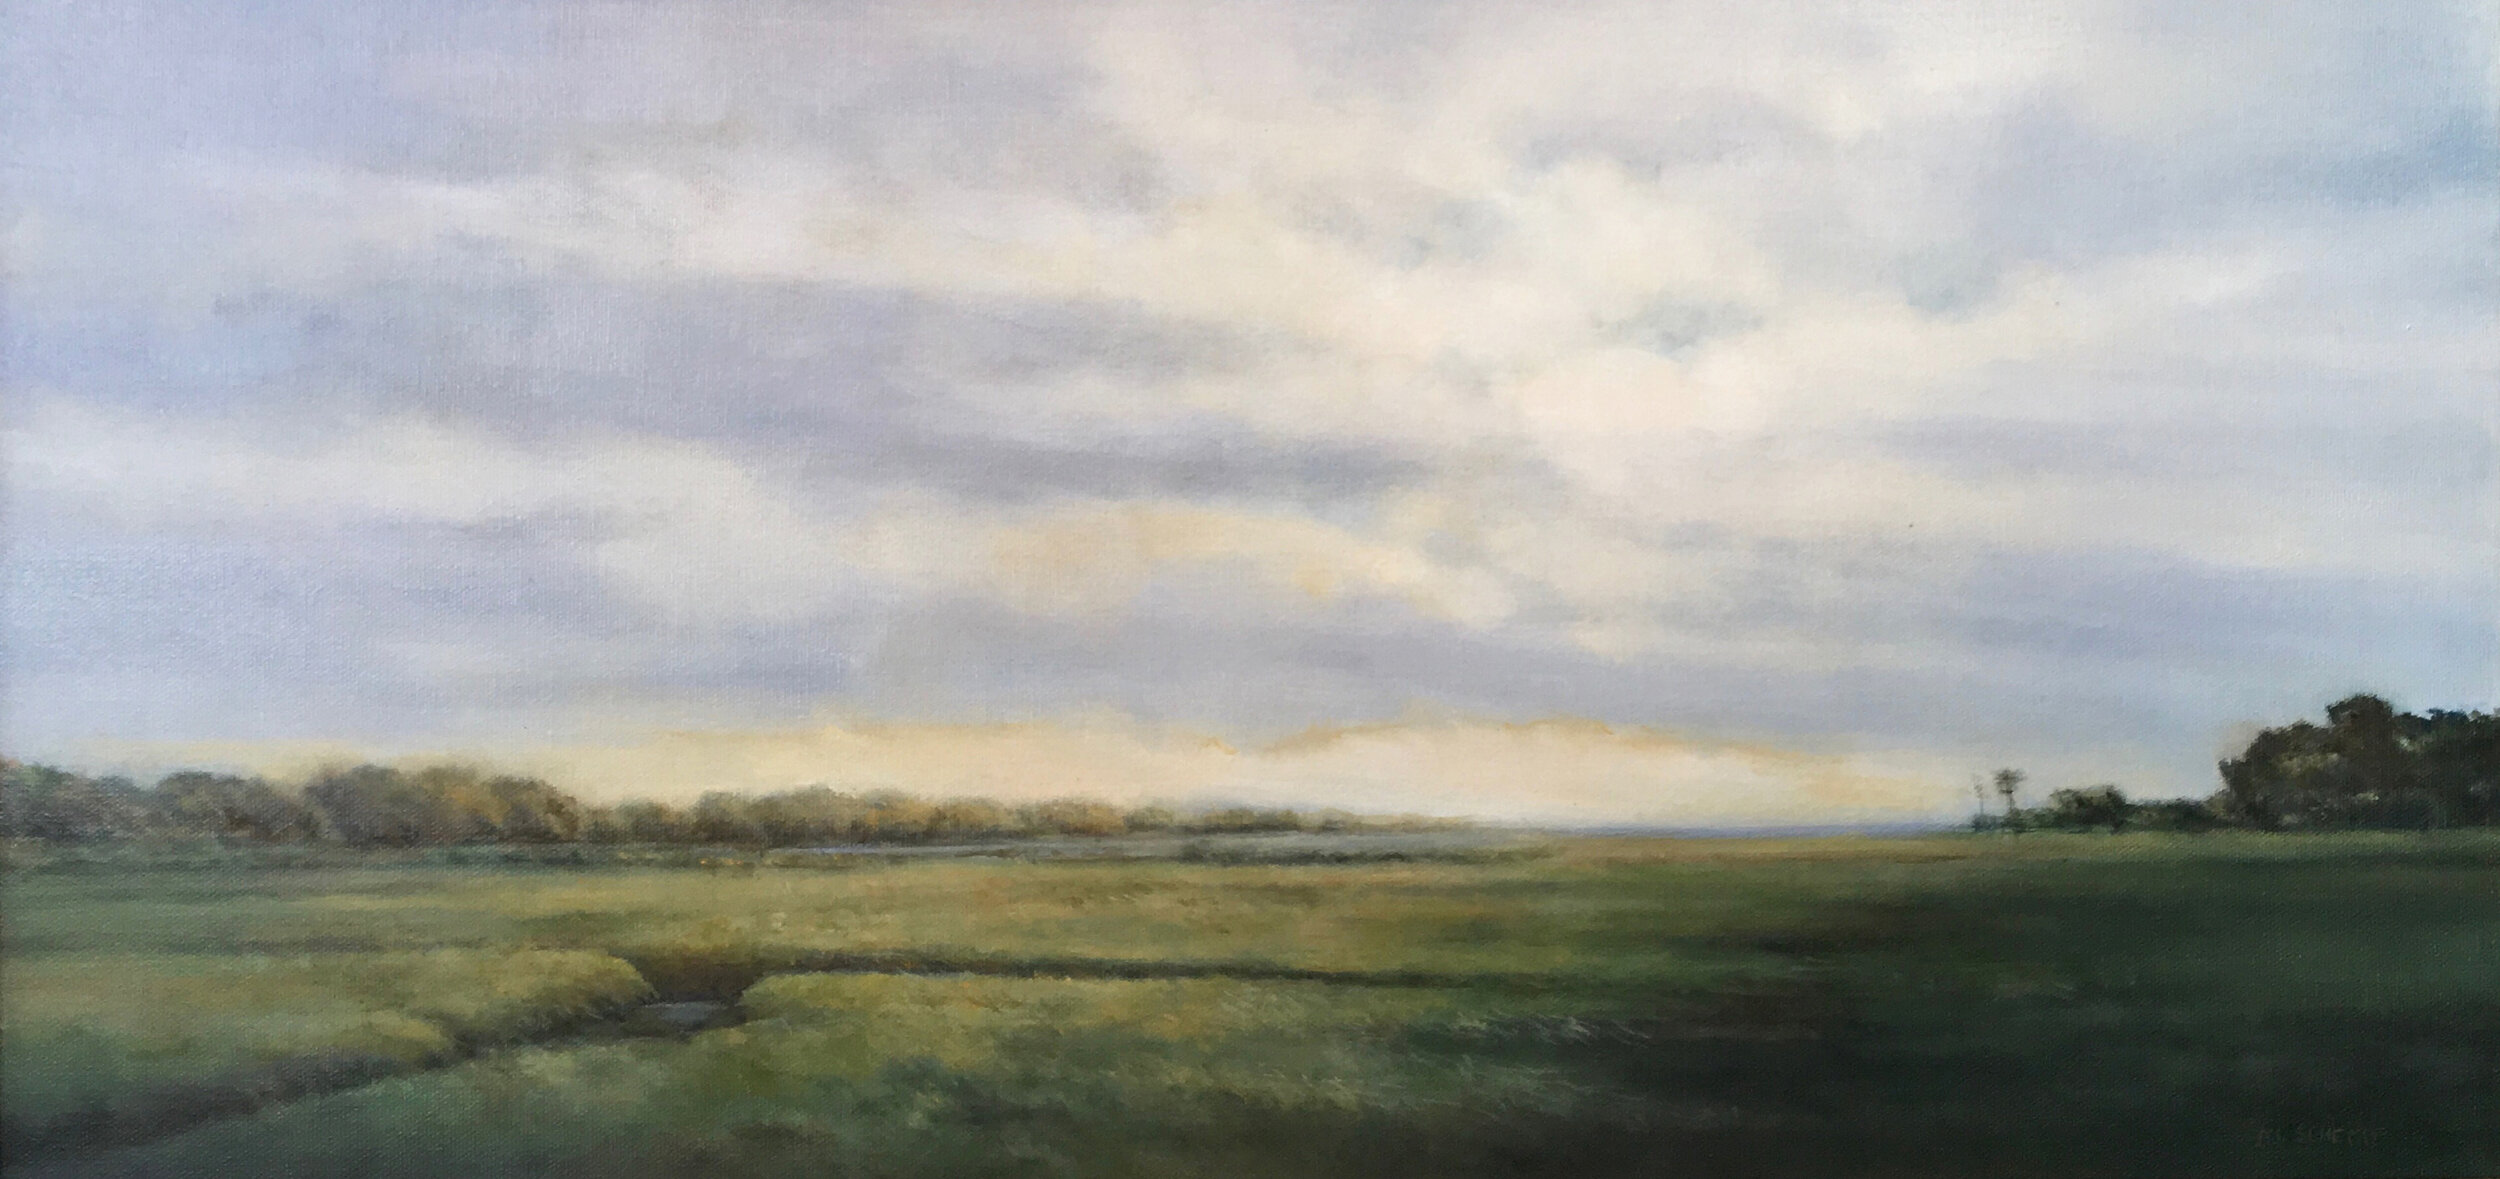  Mary Lou Schempf  Barn Island Shadow,  12” x 24”, oil on canvas  (available)  